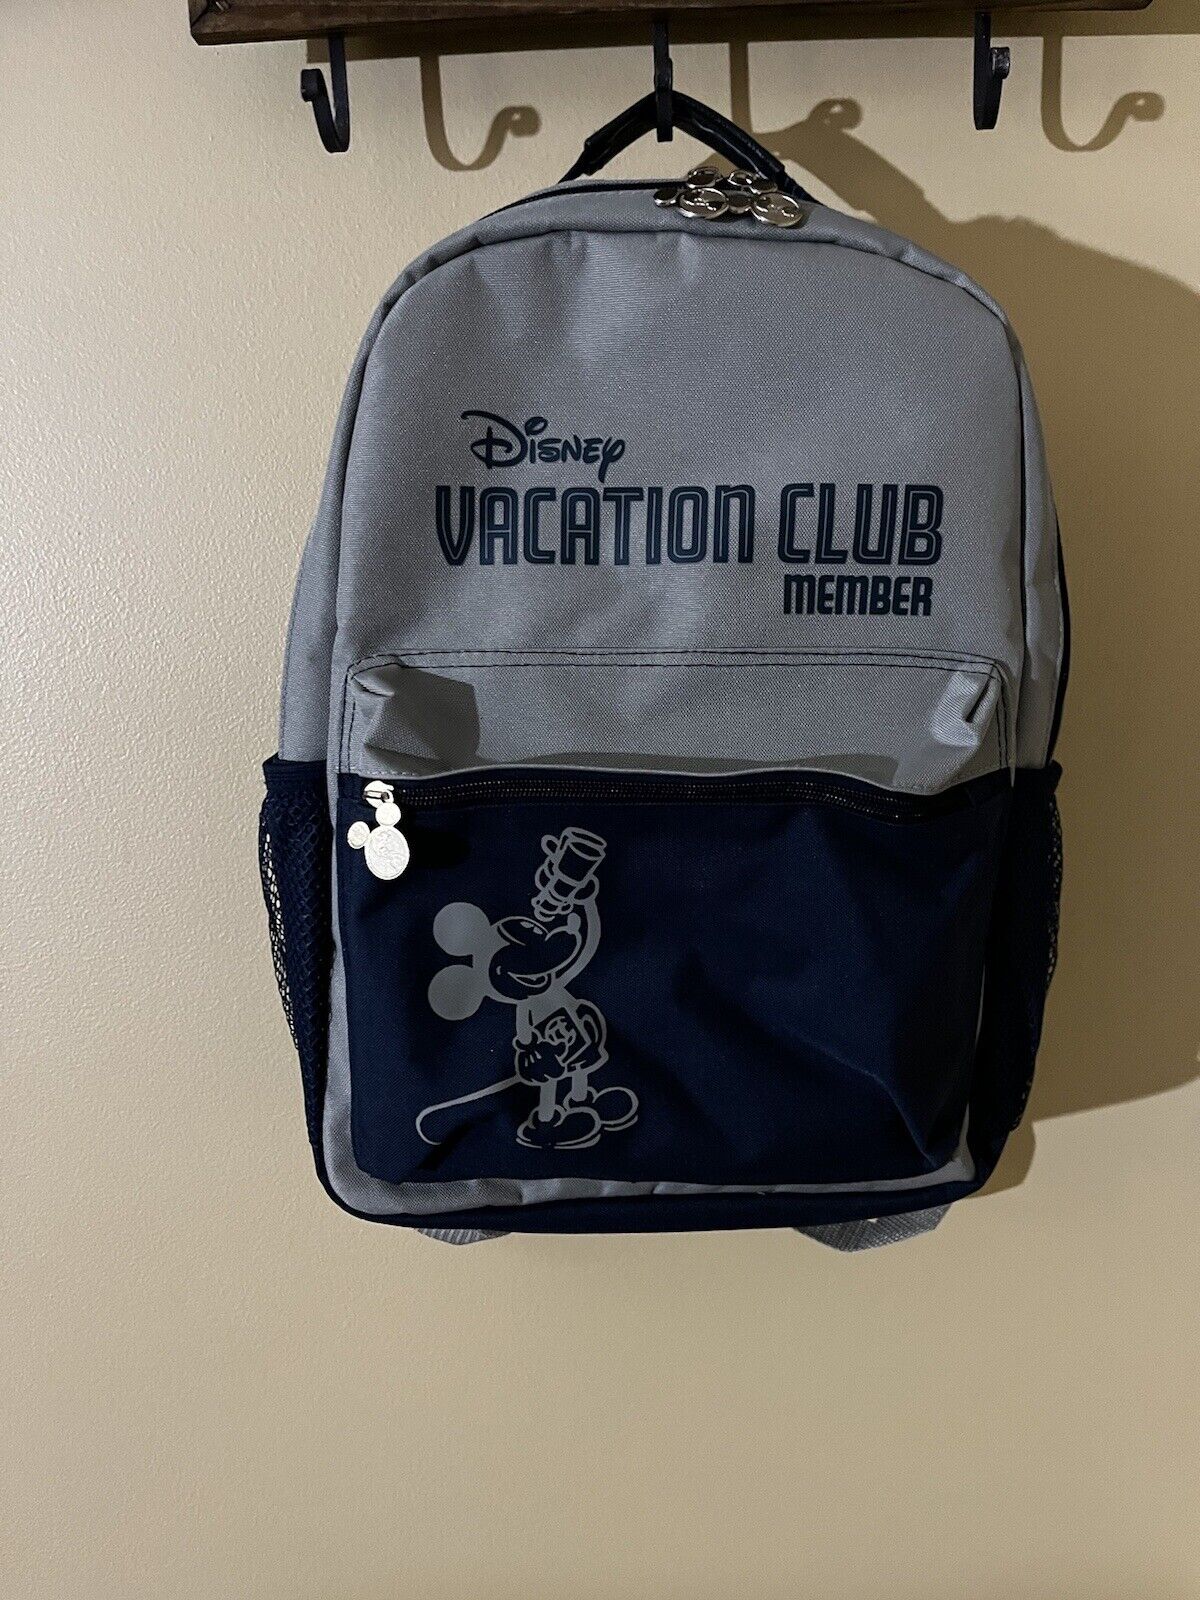 Disney Vacation Club Member Backpack Gray Blue Mickey Mouse Zipper Pockets